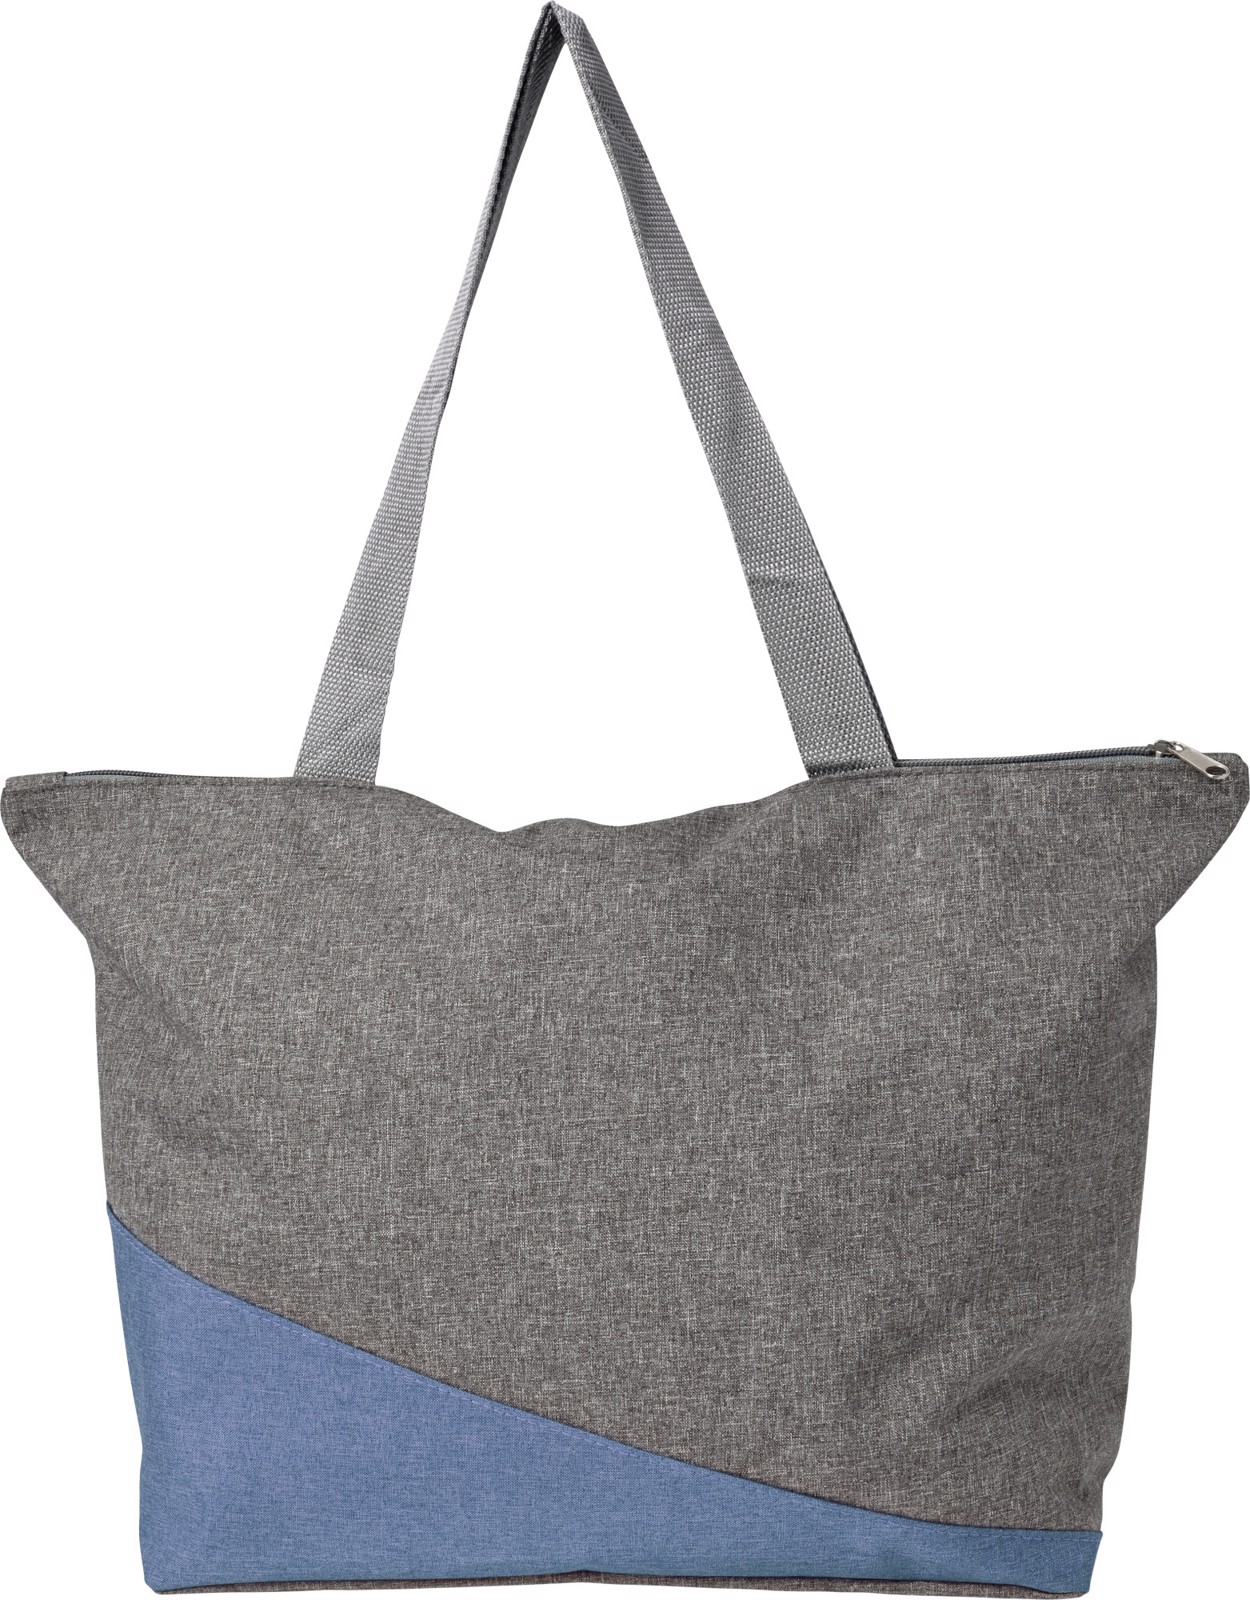 Polycanvas (300D) shopping bag - Cobalt Blue